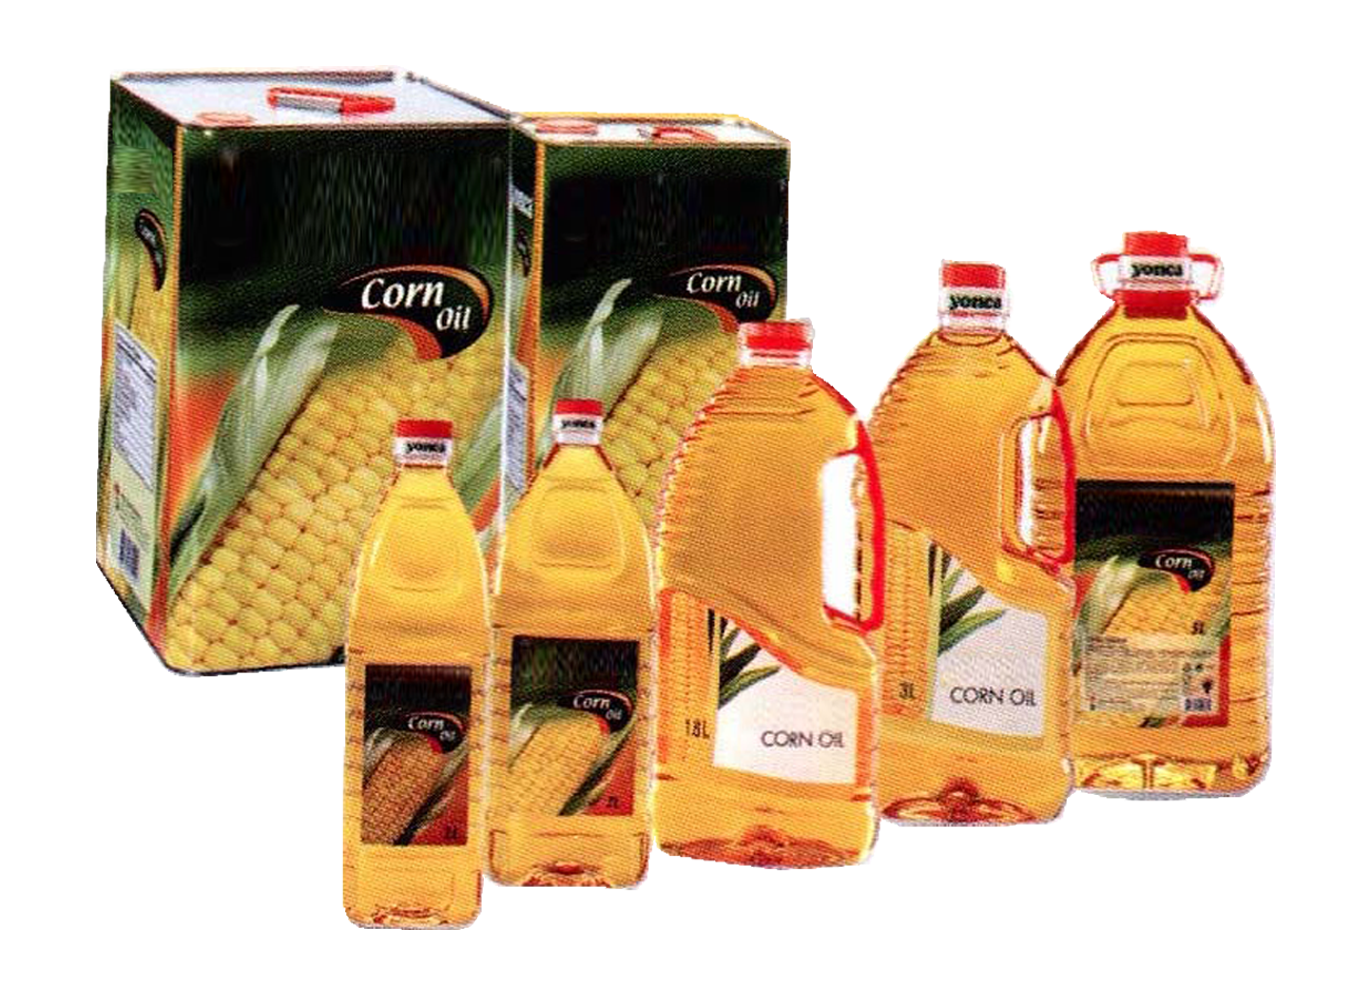 Corn oil. Кукурузное масло. Масло кукурузное PNG. Кукурузное масло Golden Corn 5 л. Yonca масло подсолнечное Турция.